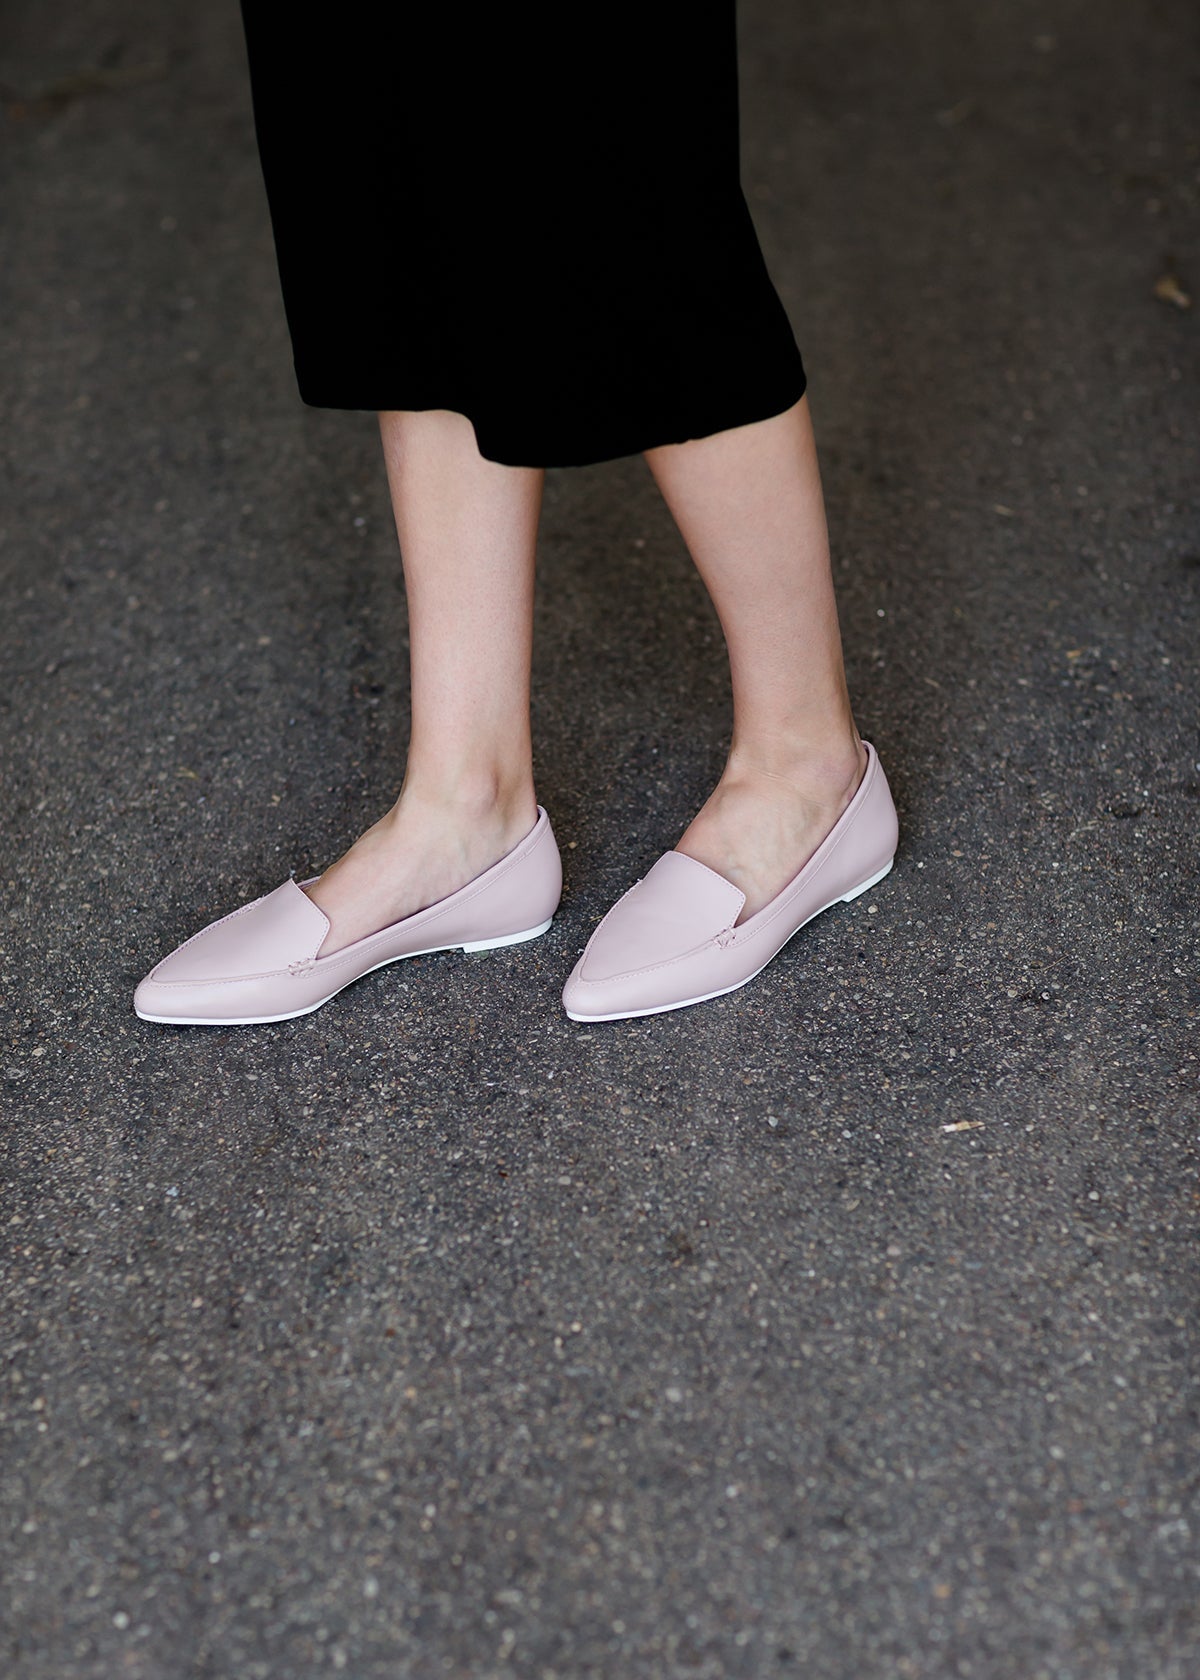 Audra women's dressy pink flat shoe